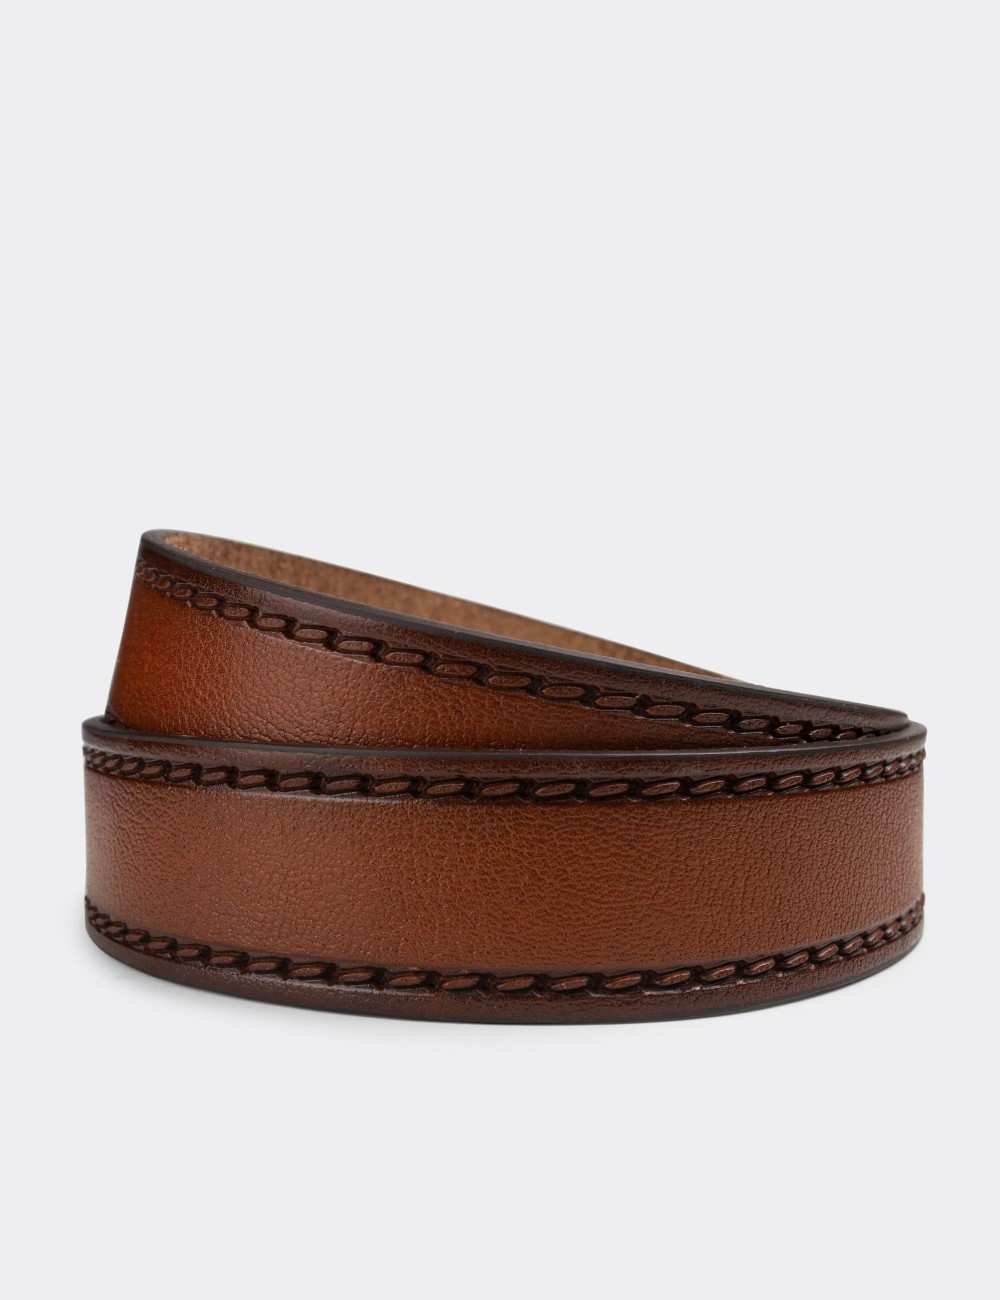  Leather Tan Men's Belt - K0106MTBAW01